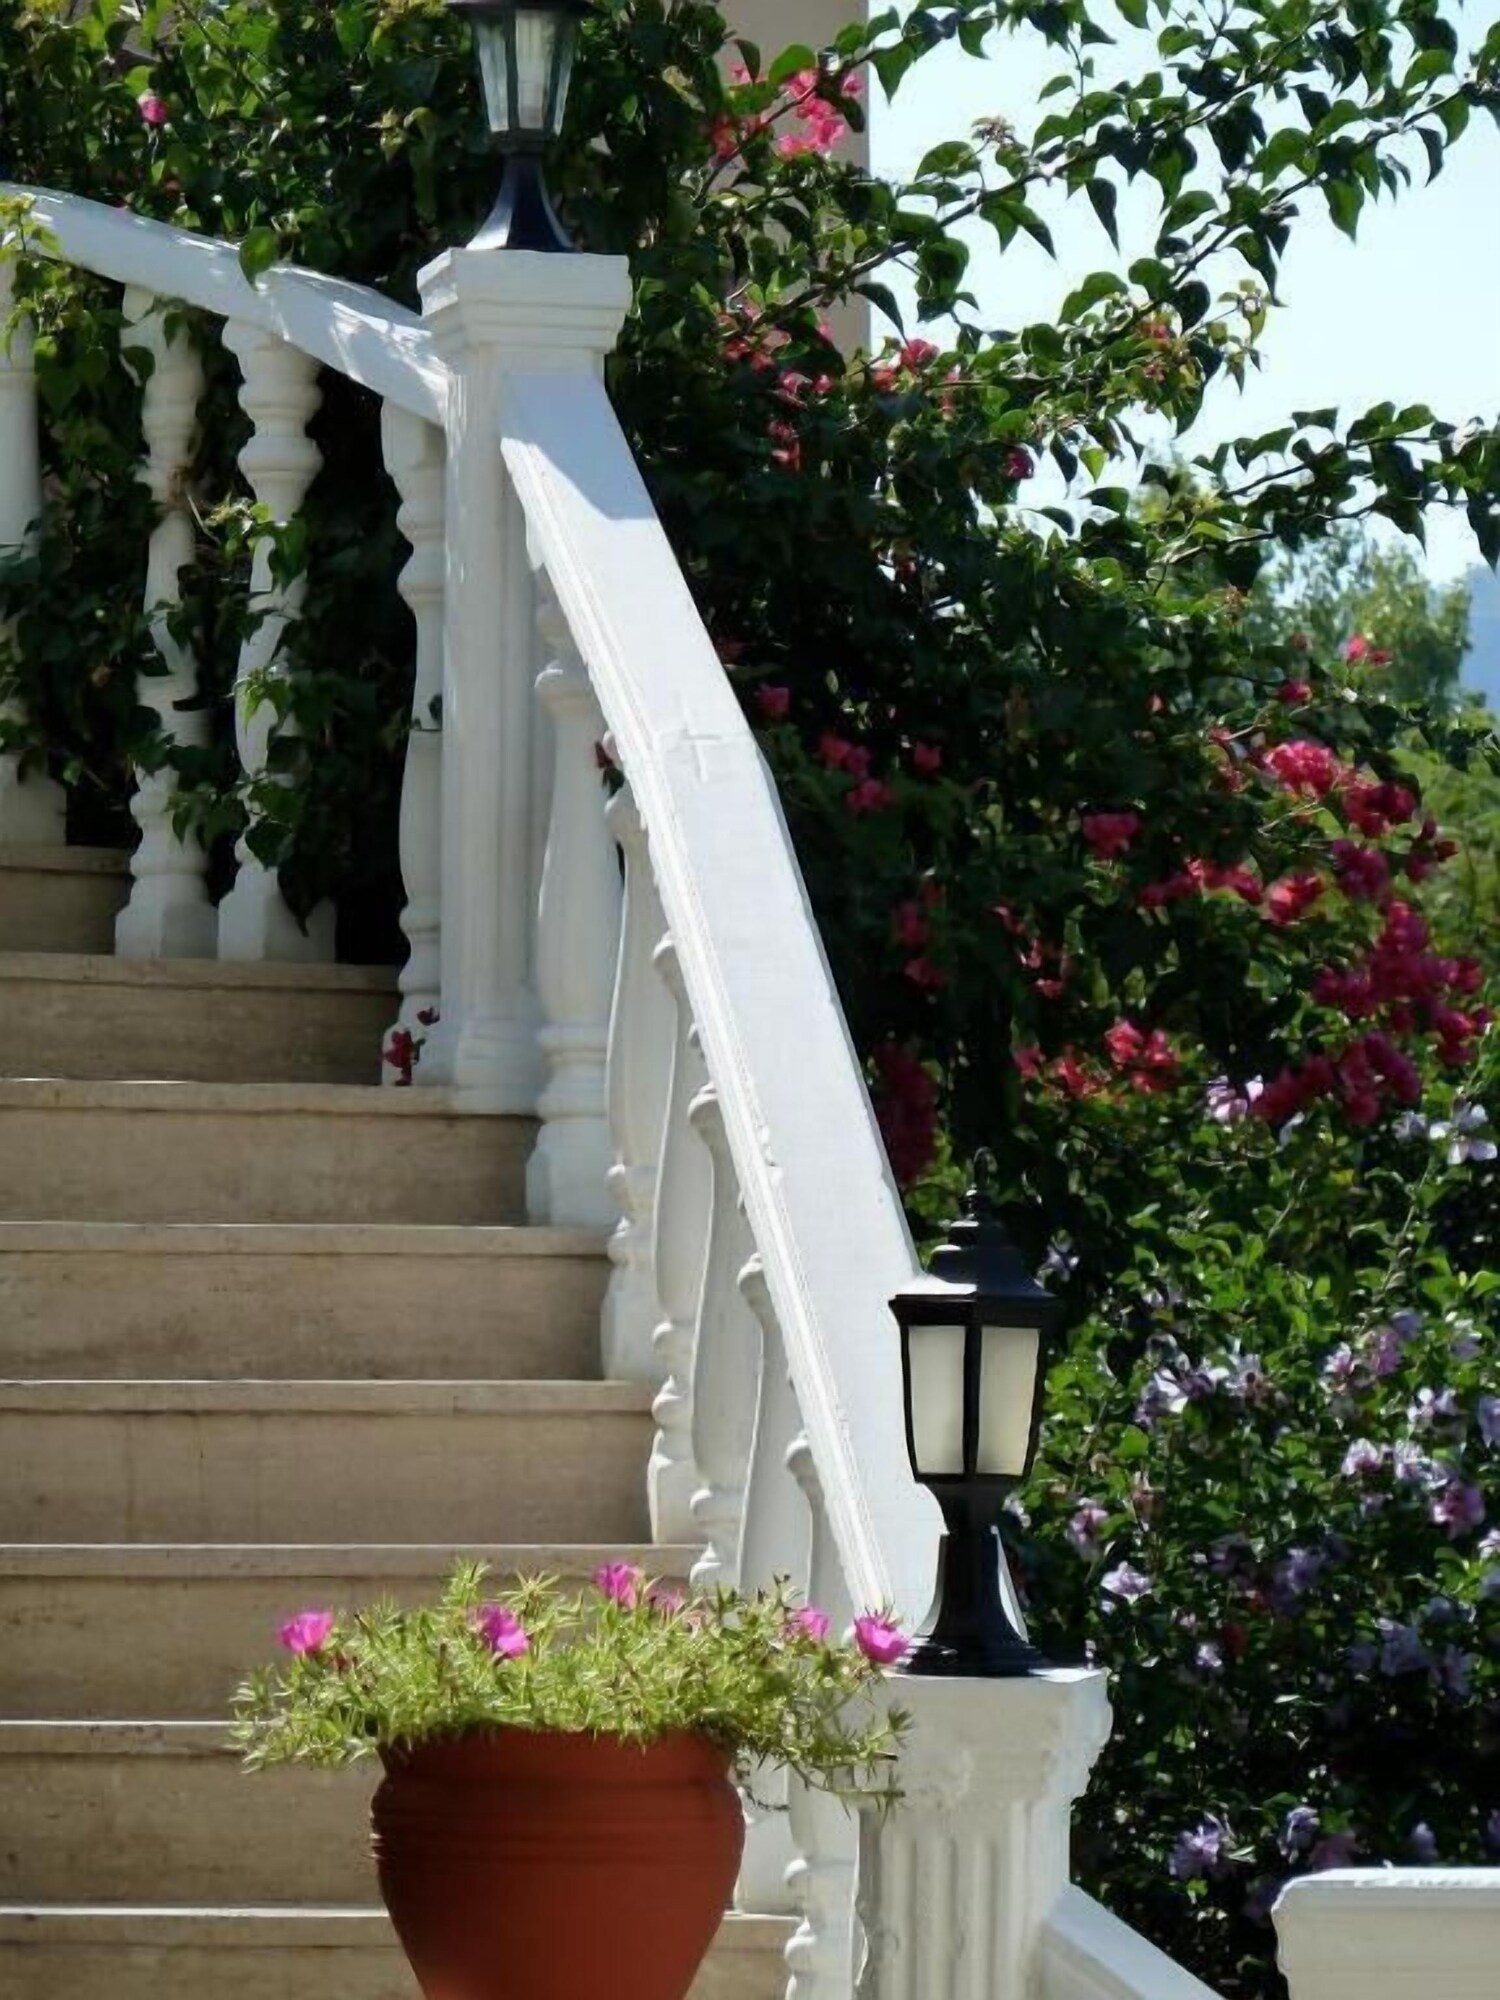 Garden Resort Bergamot Hotel – All Inclusive